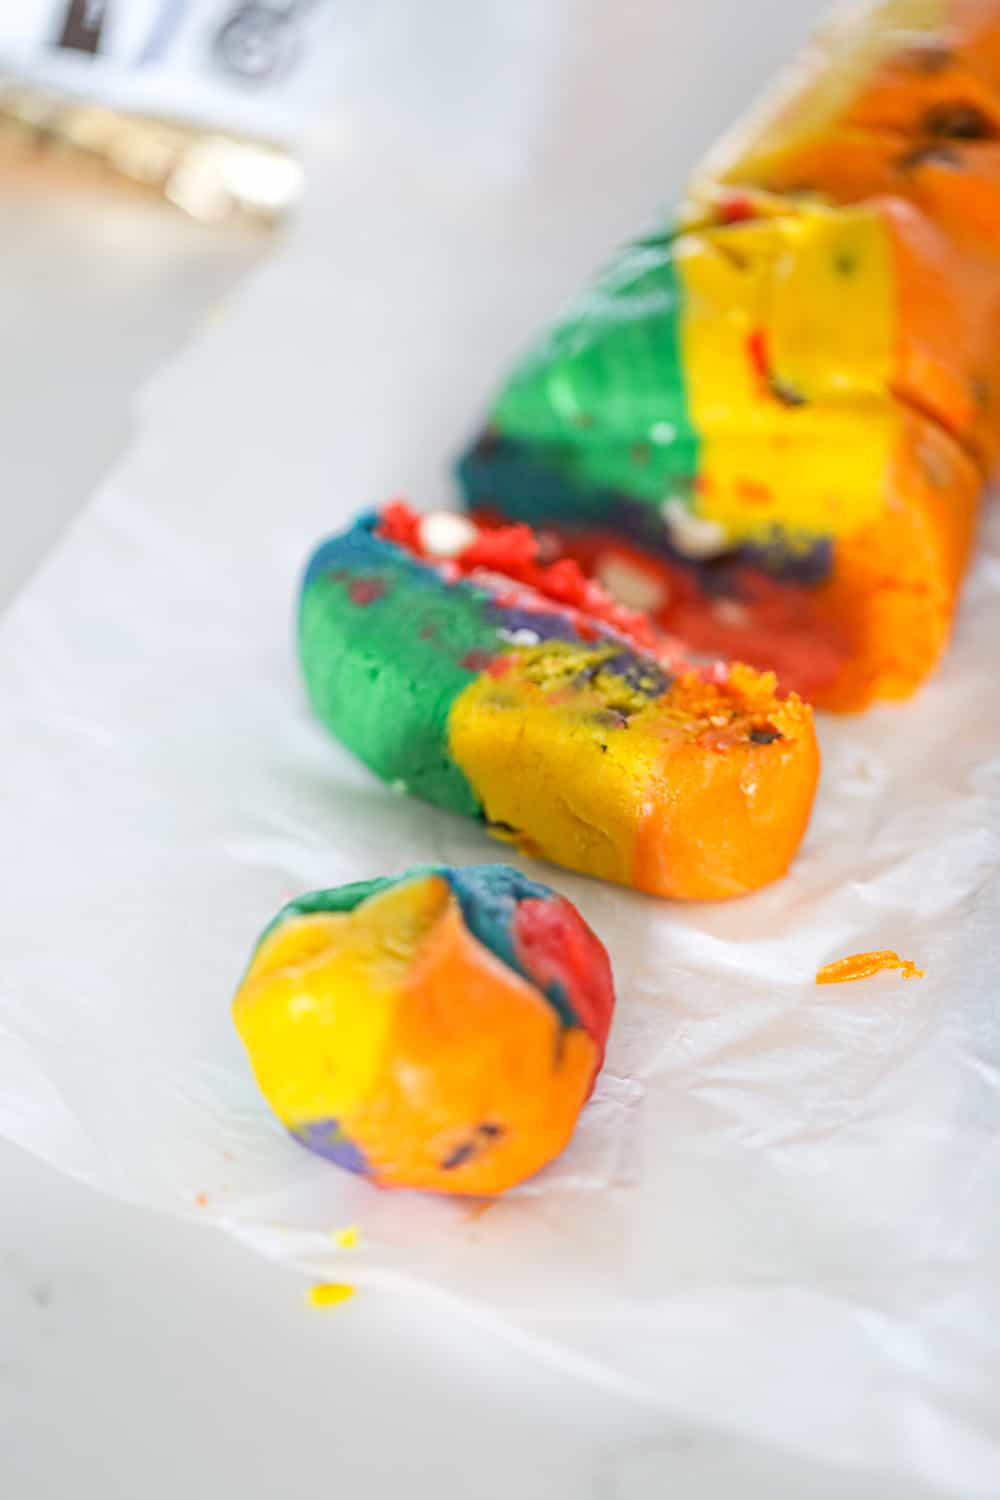 Rainbow Cookies slicing them into cookies